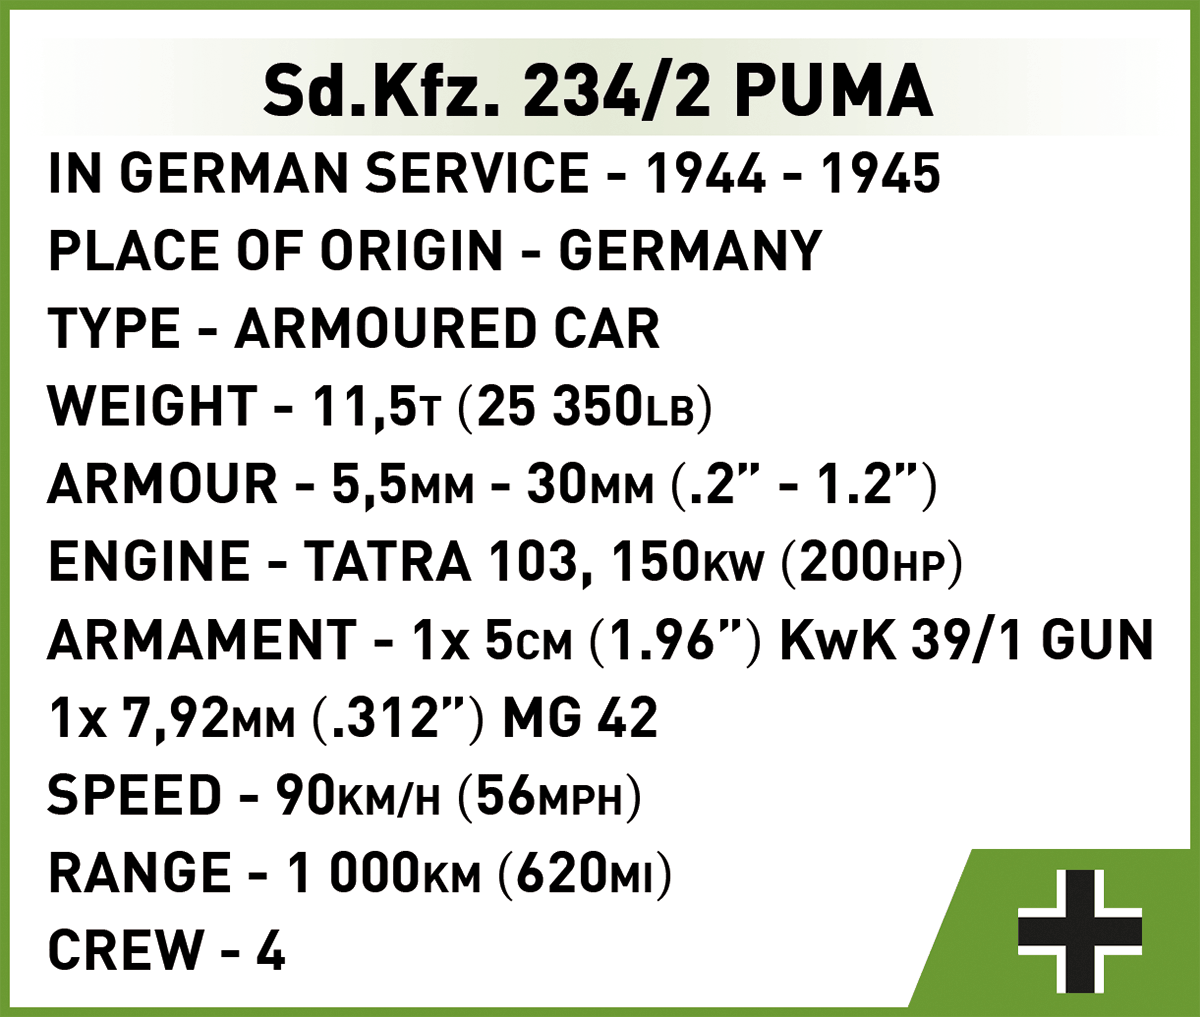 German wheeled armoured halftrack Sd.Kfz. 251/9 COBI 2283 - World War II 1:35 - kopie